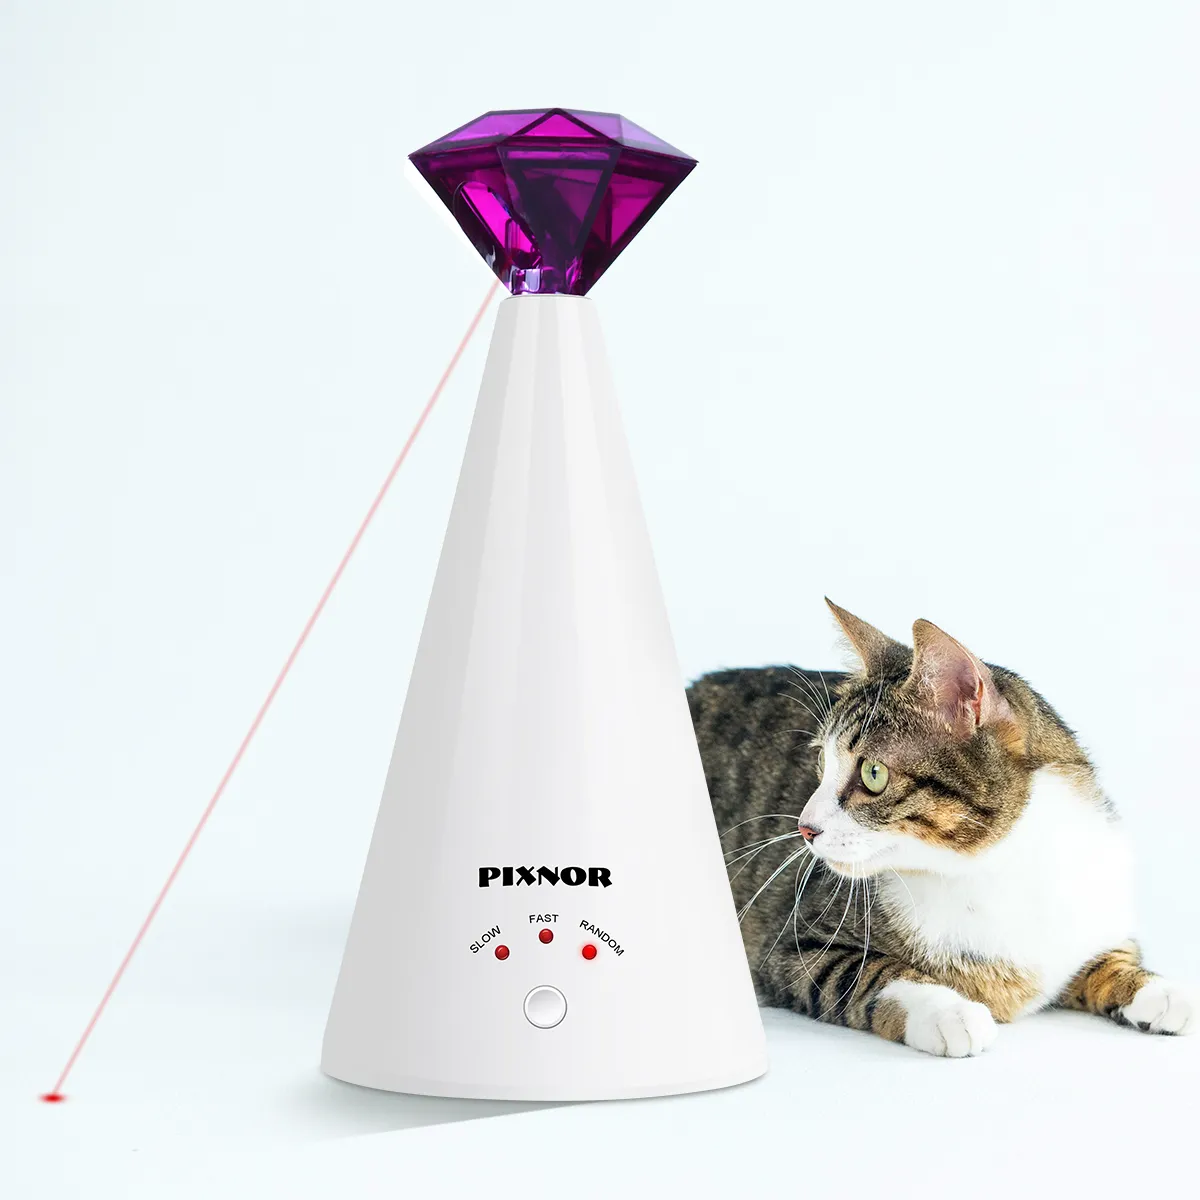 PIXNOR Smart Laser Teasing Device Electric Toy Home Interactive Cat Adjustable 3 Speeds Pet Pointer Purple 2011123296067